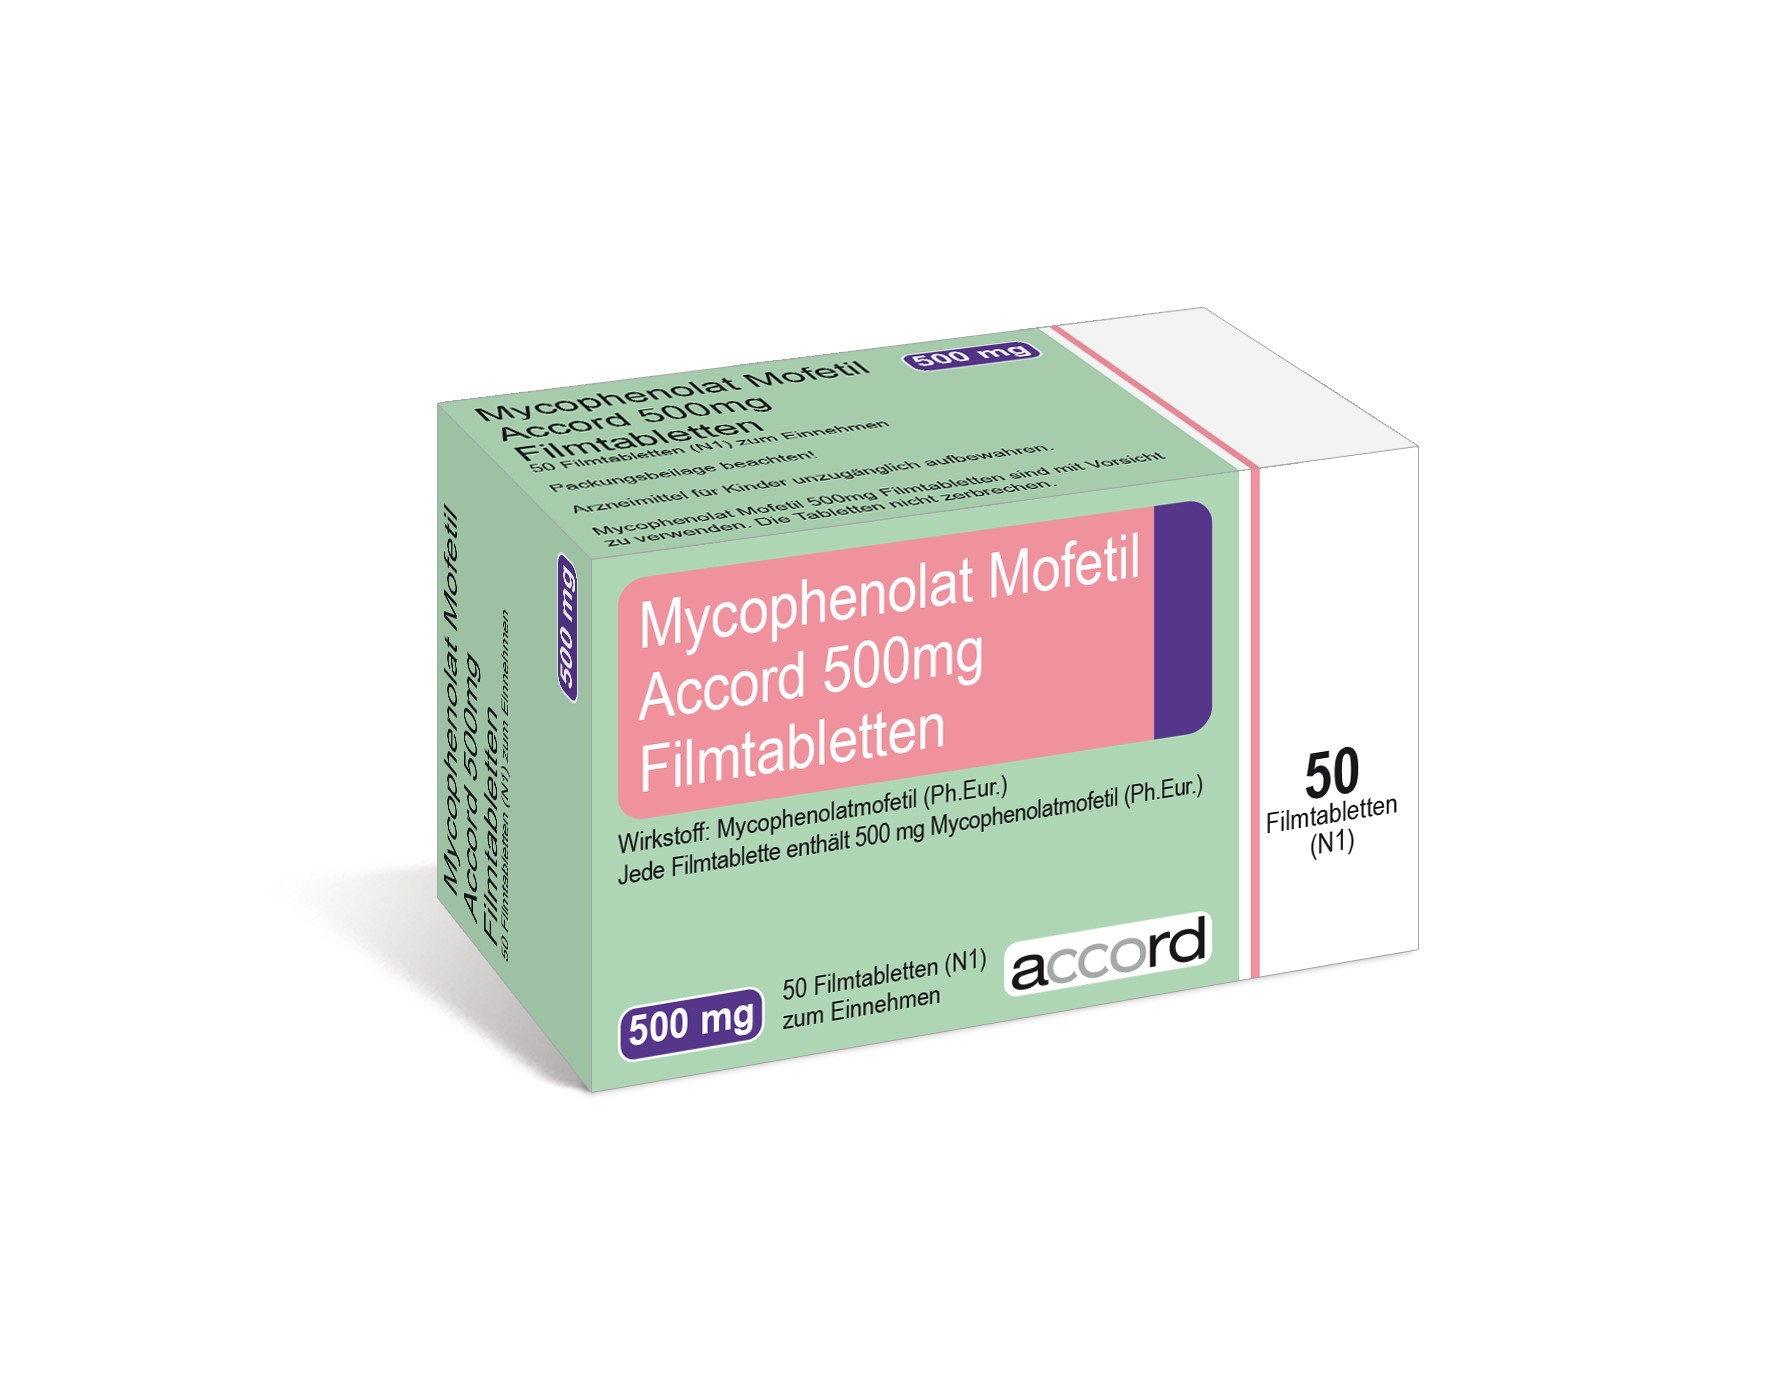 Accord Packshot Mycophenonalt Mofetil 500 mg